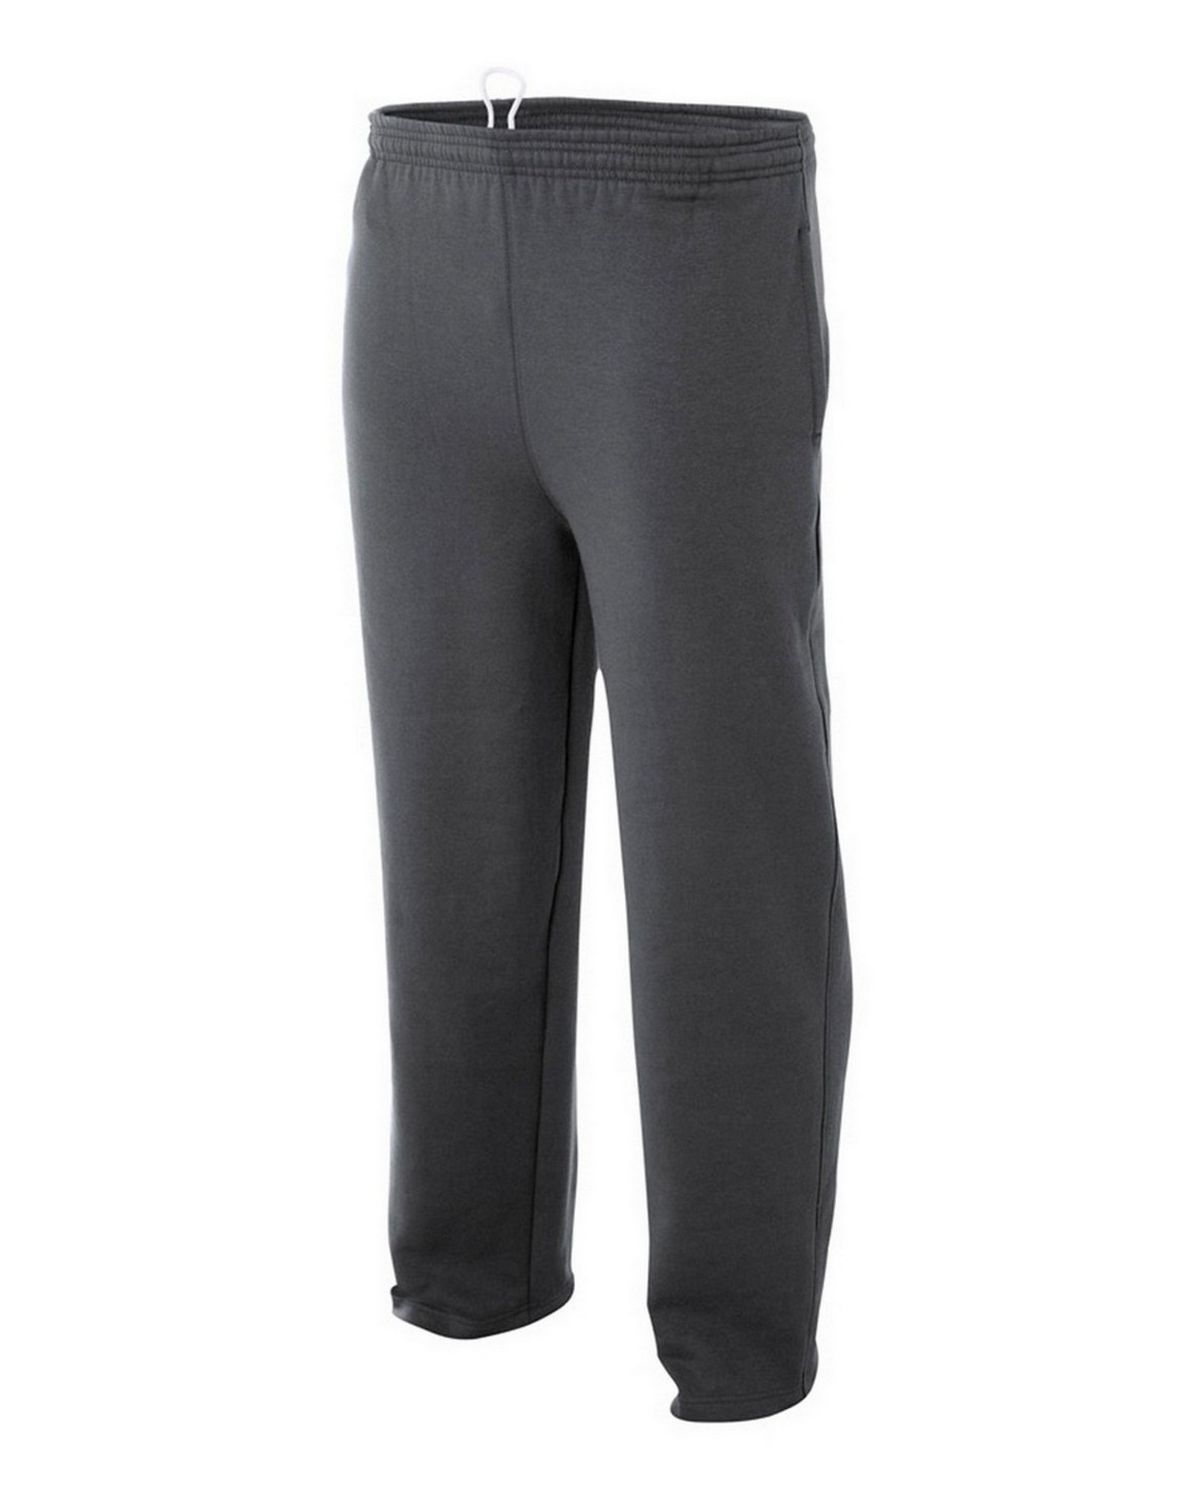 A4 N6193 Men's Tech Fleece Pants